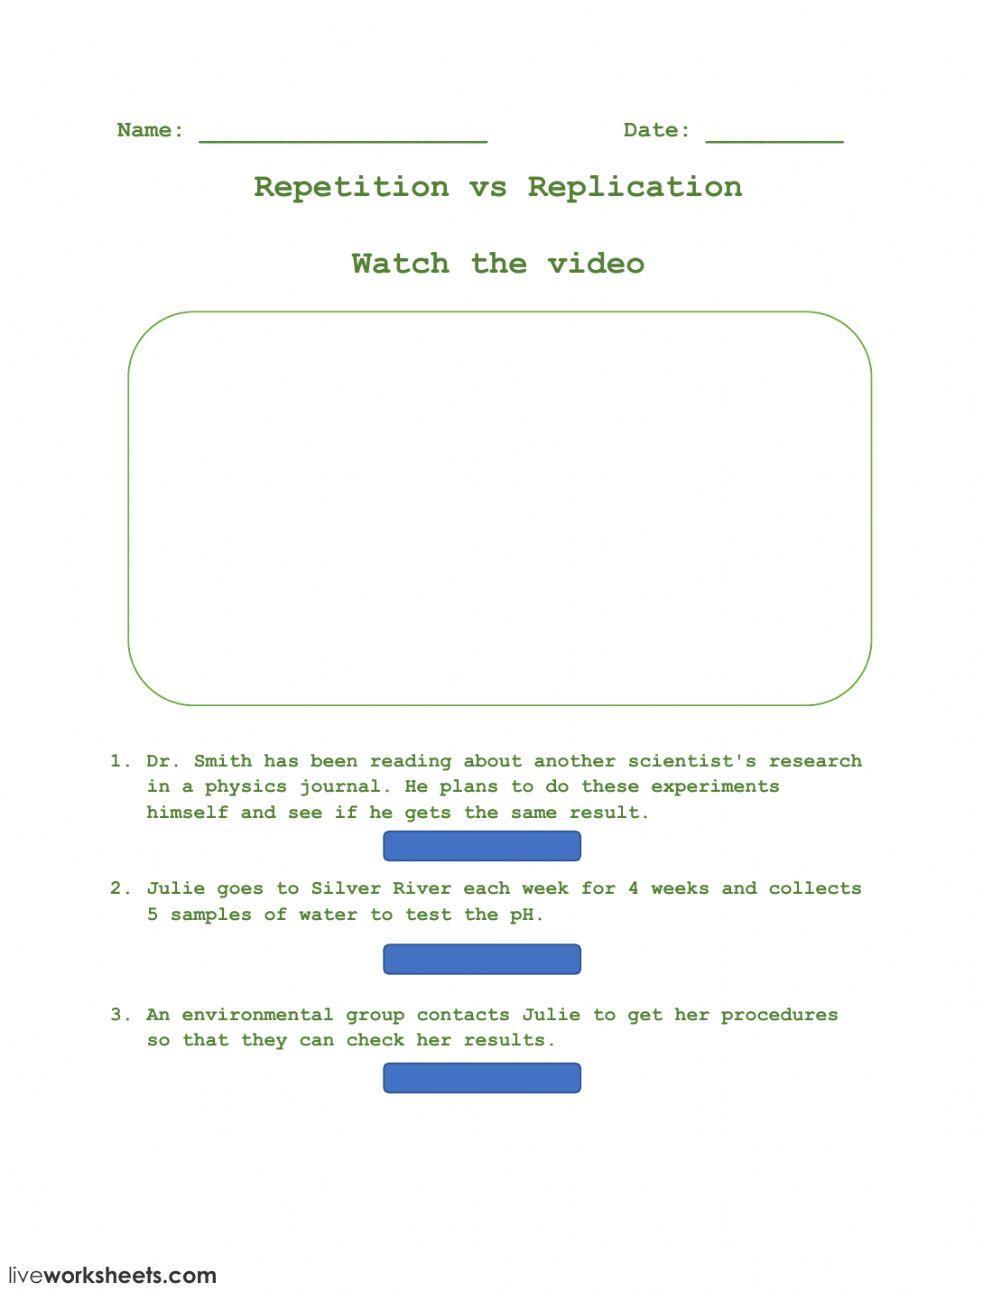 Repetition vs Replication